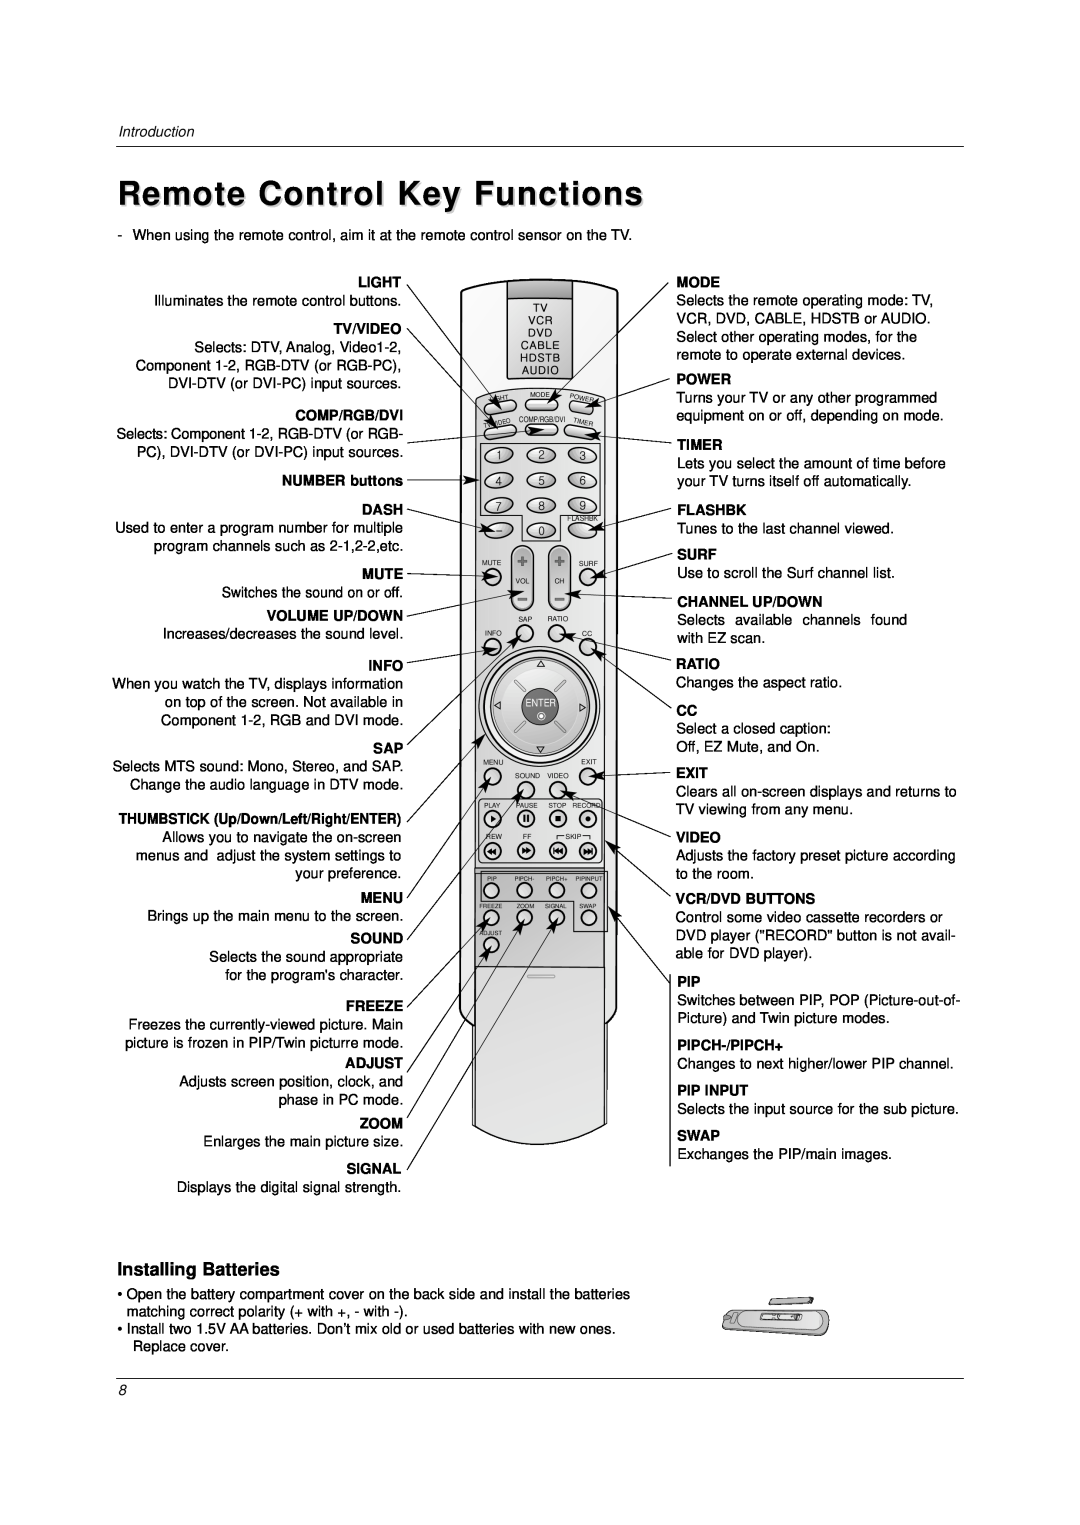 LG Electronics DU-37LZ30 Remote Control Key Functions, Installing Batteries, Light, Mode, Tv/Video, Comp/Rgb/Dvi, Power 